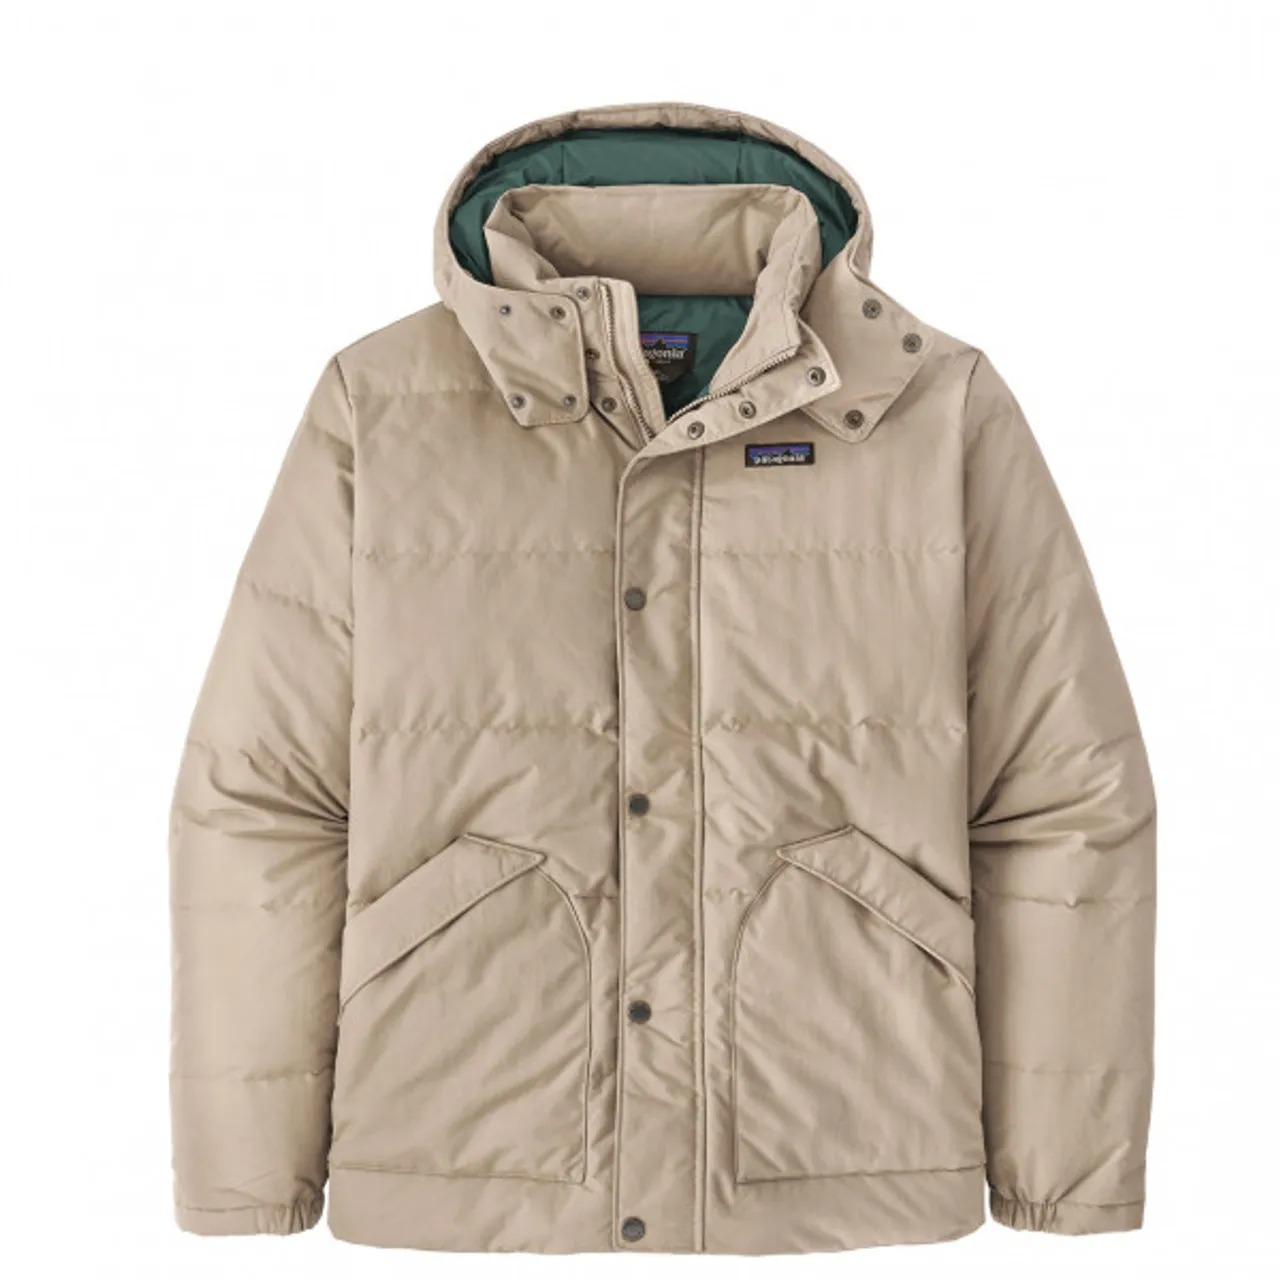 Patagonia - Downdrift Jacket - Winter jacket